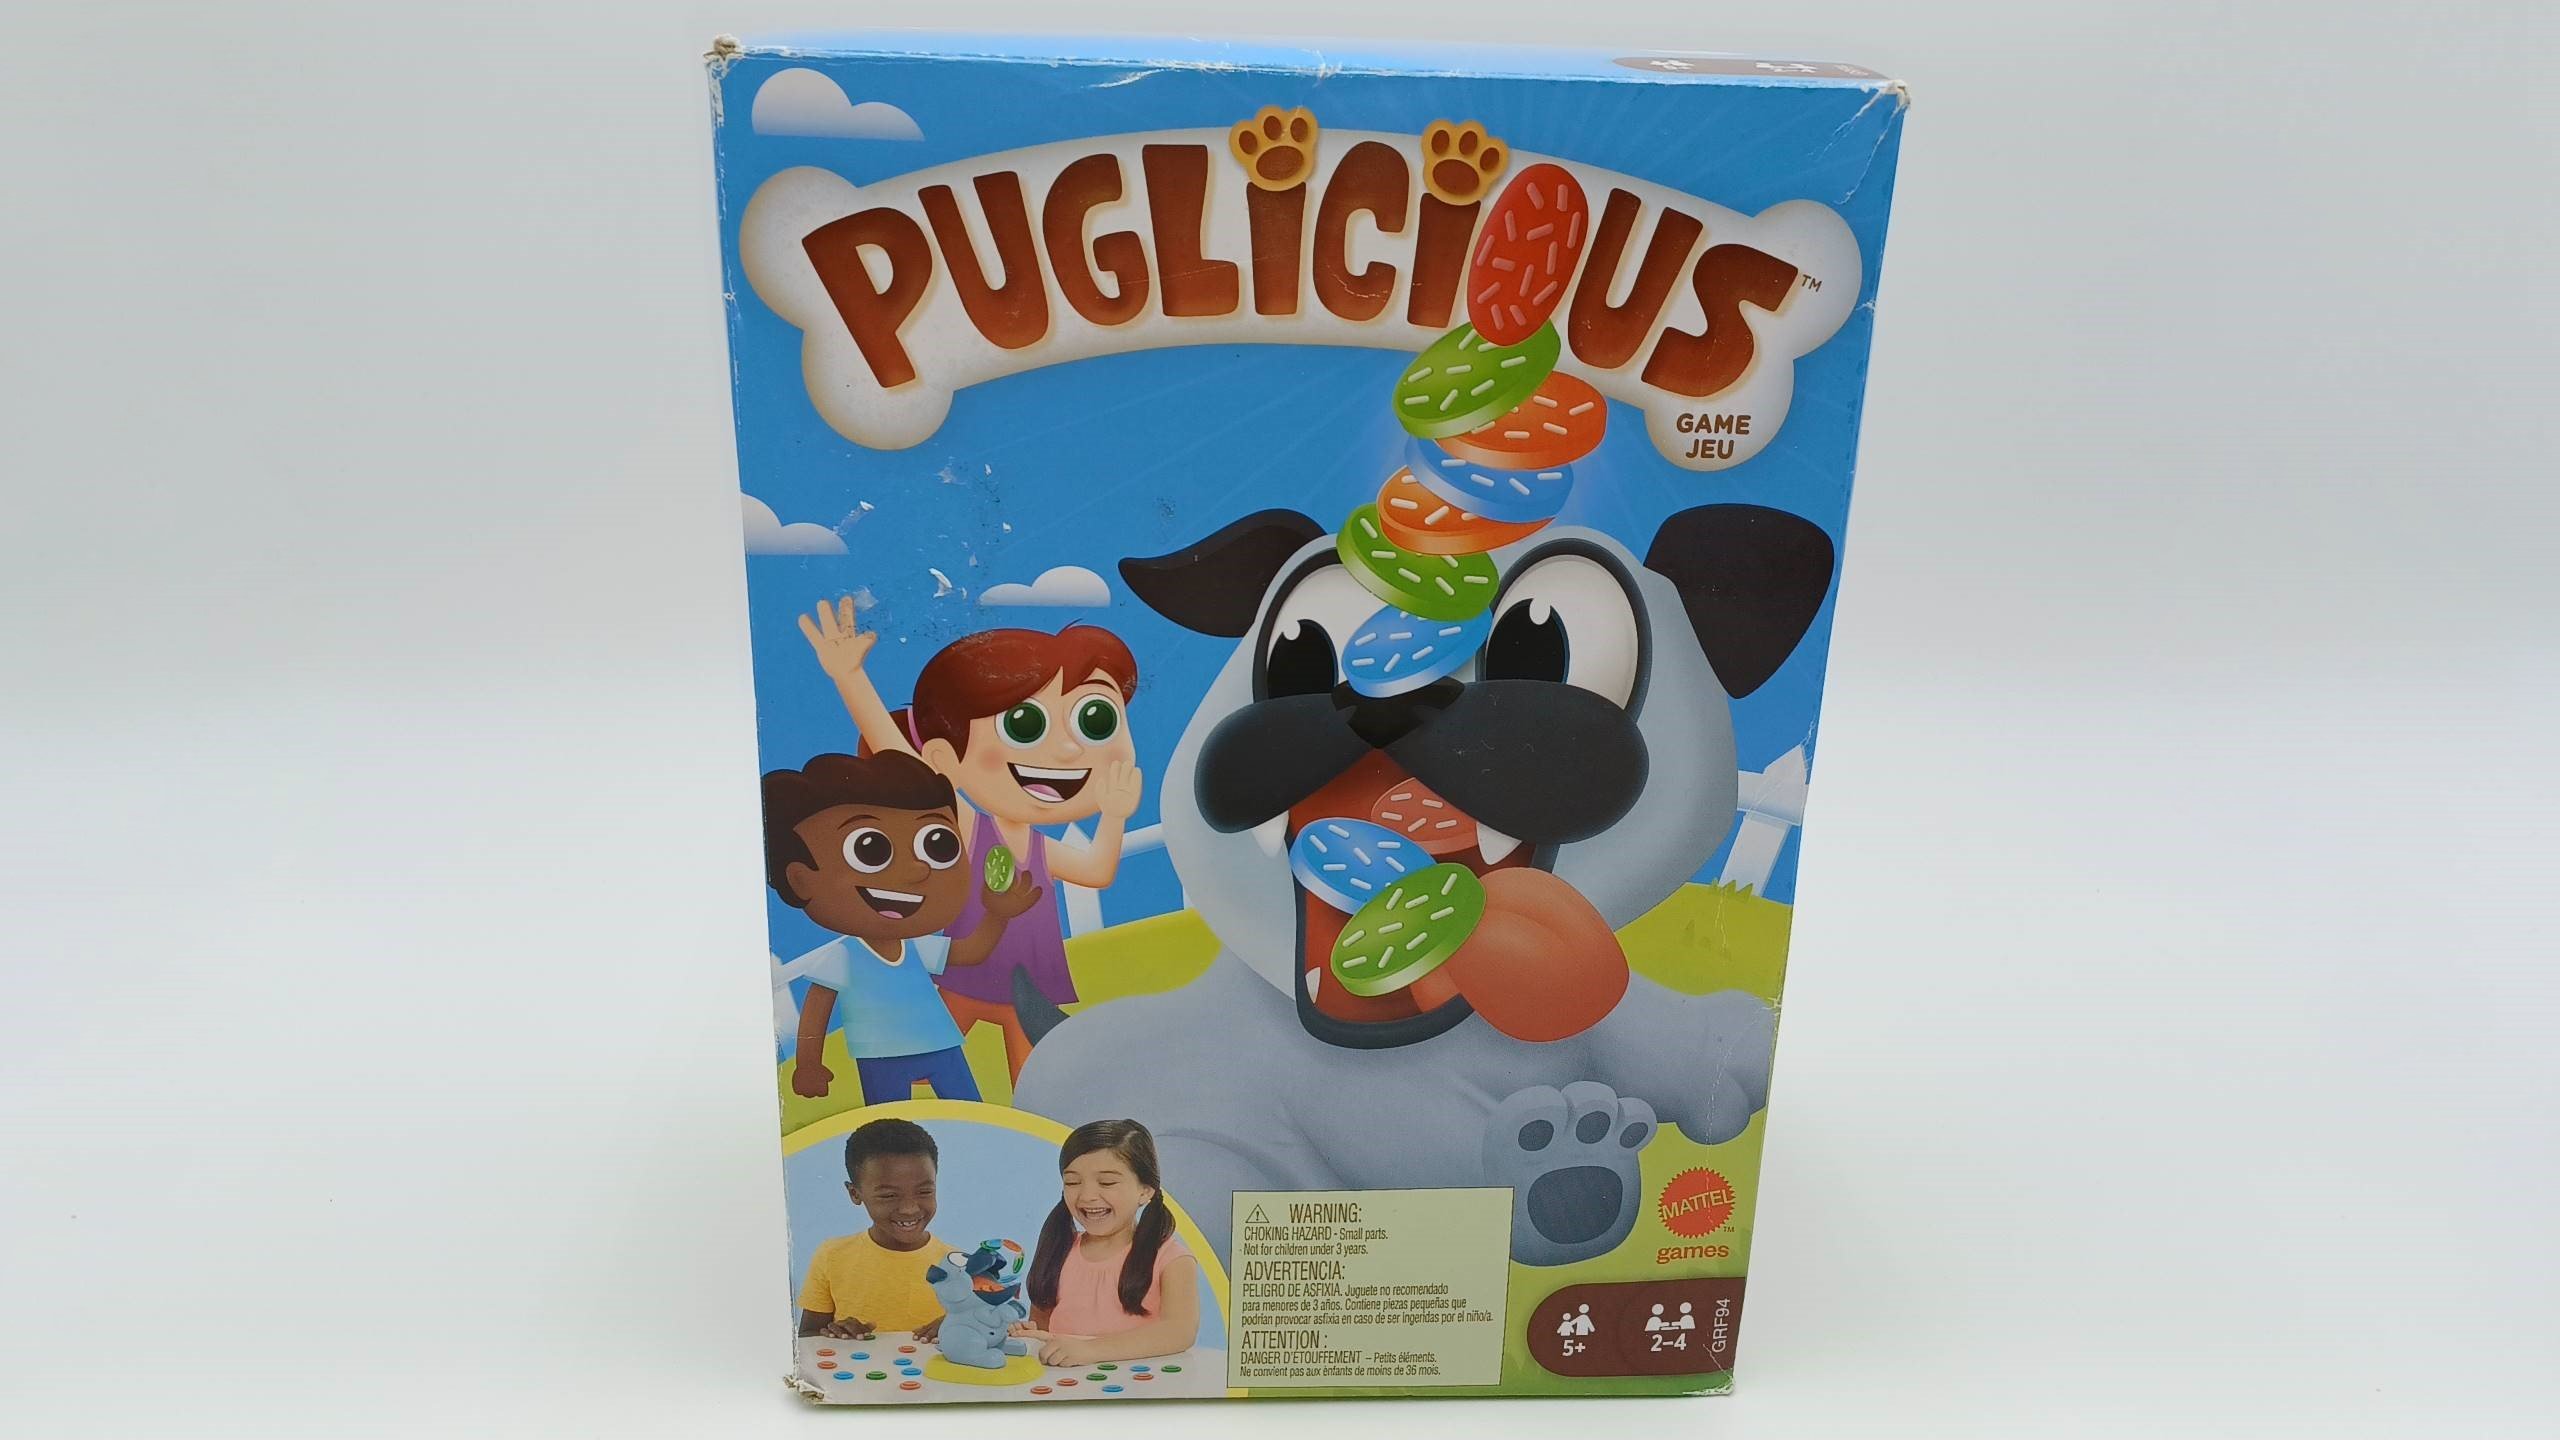 Box for Puglicious